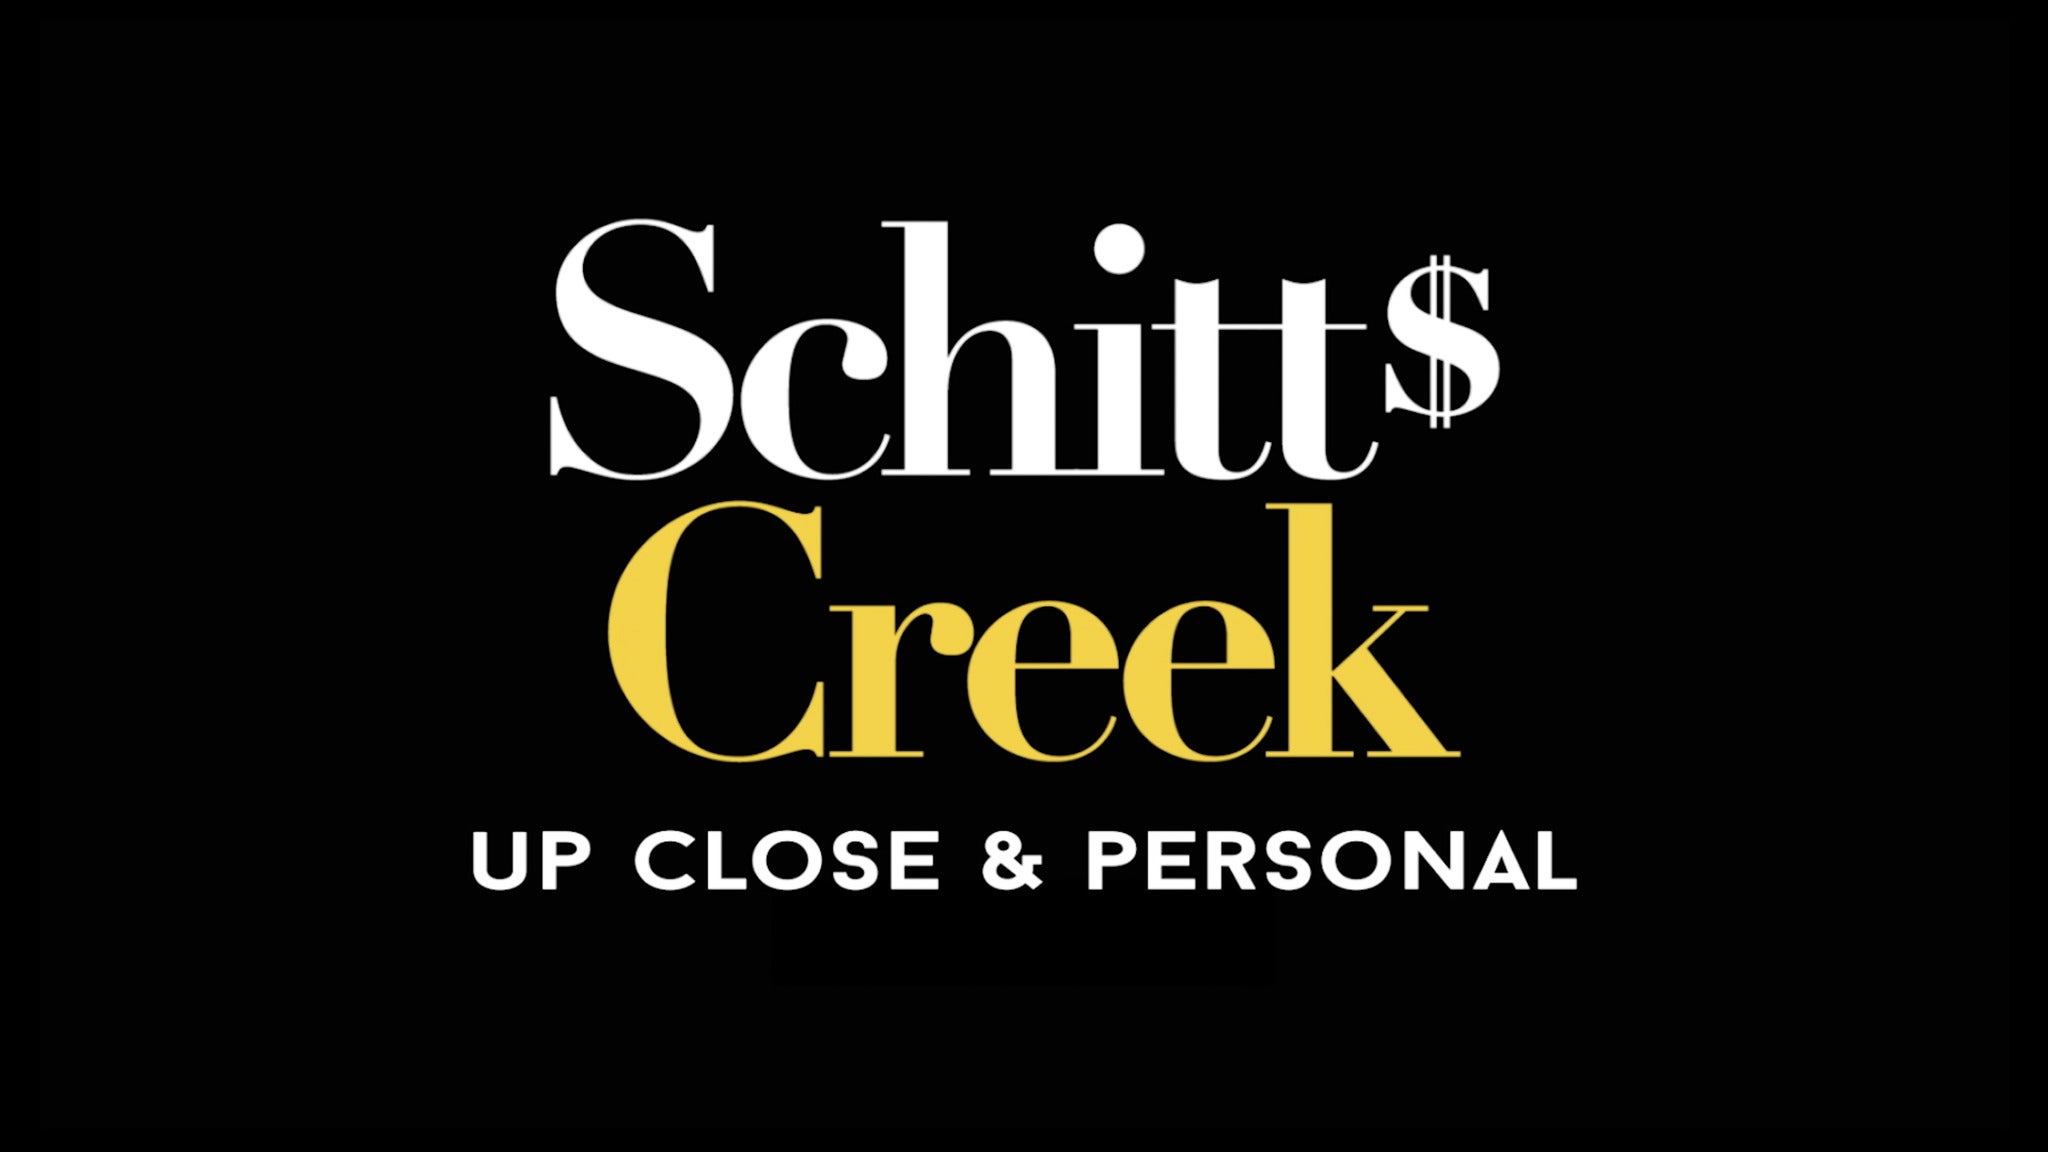 Schitt's Creek: Up Close & Personal in Atlantic City promo photo for Artist presale offer code